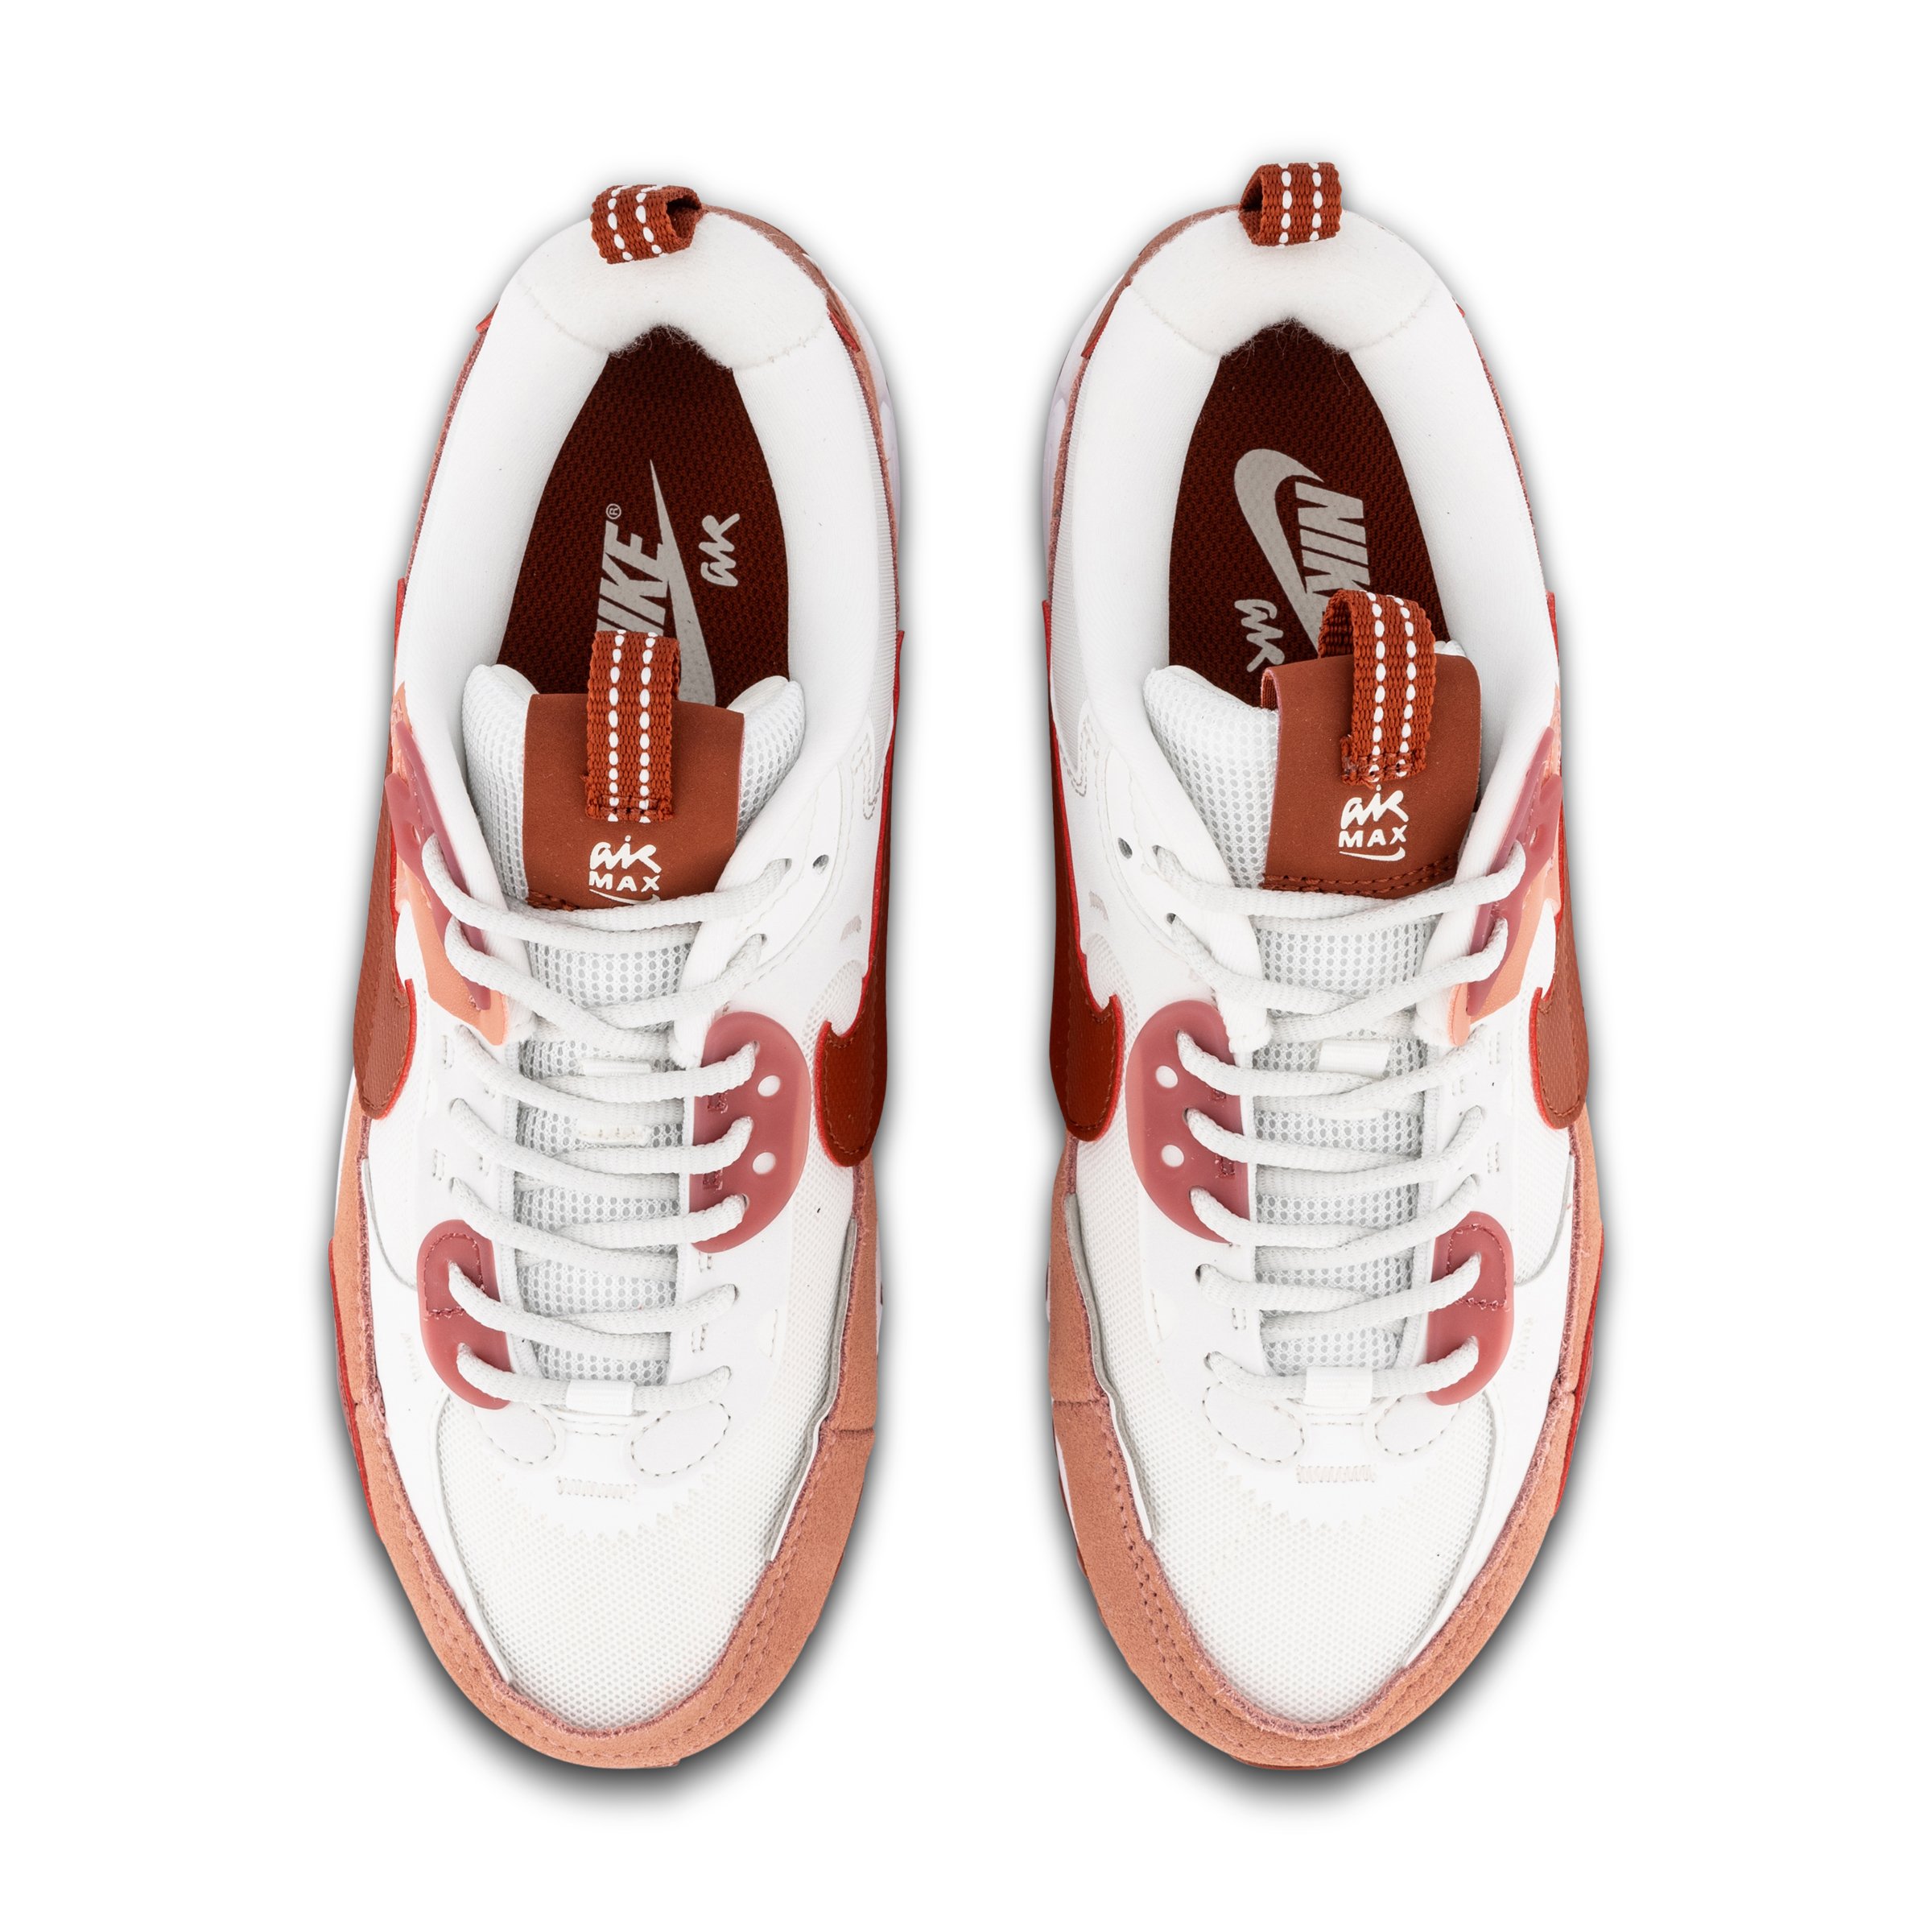 Nike Air Max 90 Futura Sneaker in Red Stardust, Rugged Orange, & Summit